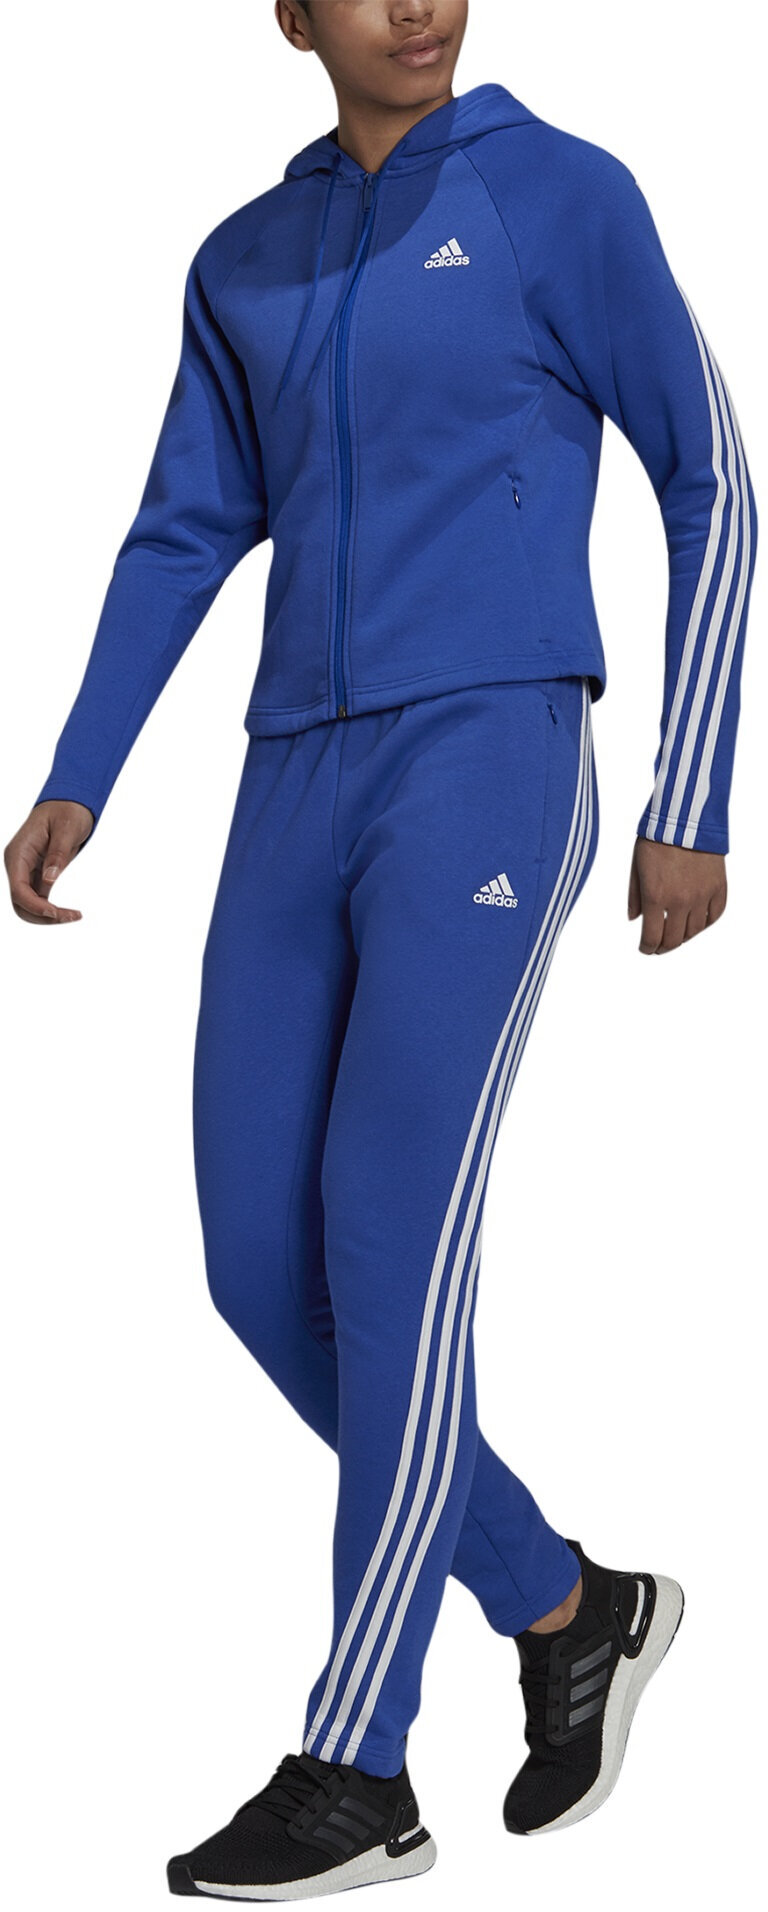 Sportinis kostiumas moterims Adidas W Energize Ts Blue H24117, mėlynas  kaina | pigu.lt